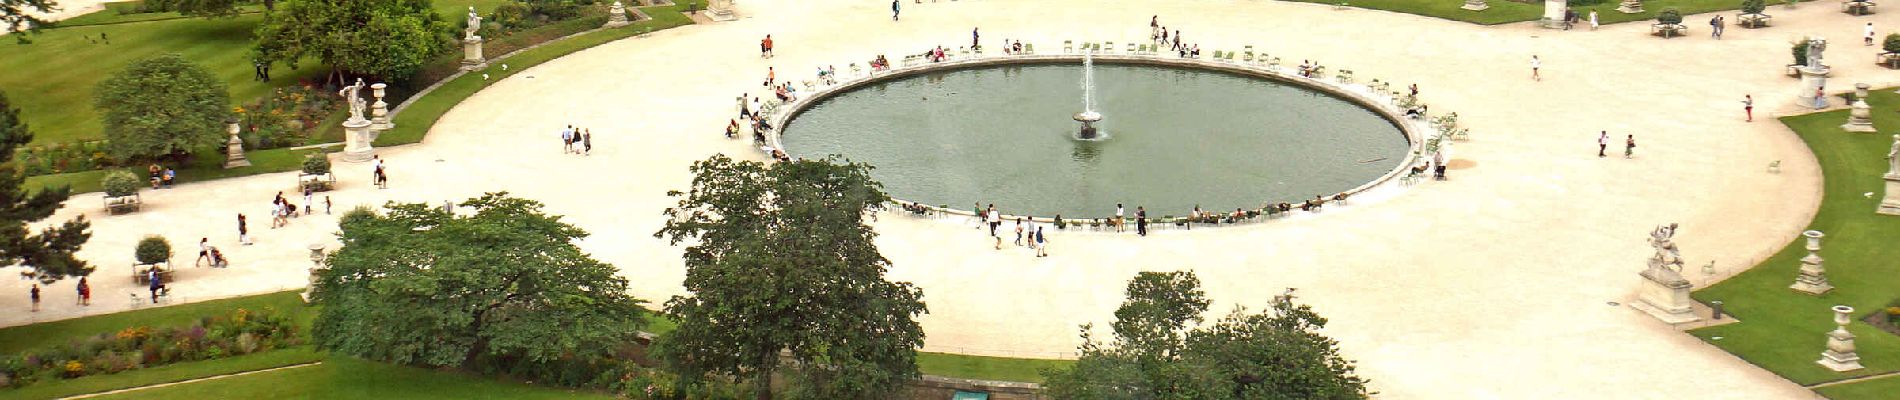 POI Parijs - Jardin des tuileries - Photo